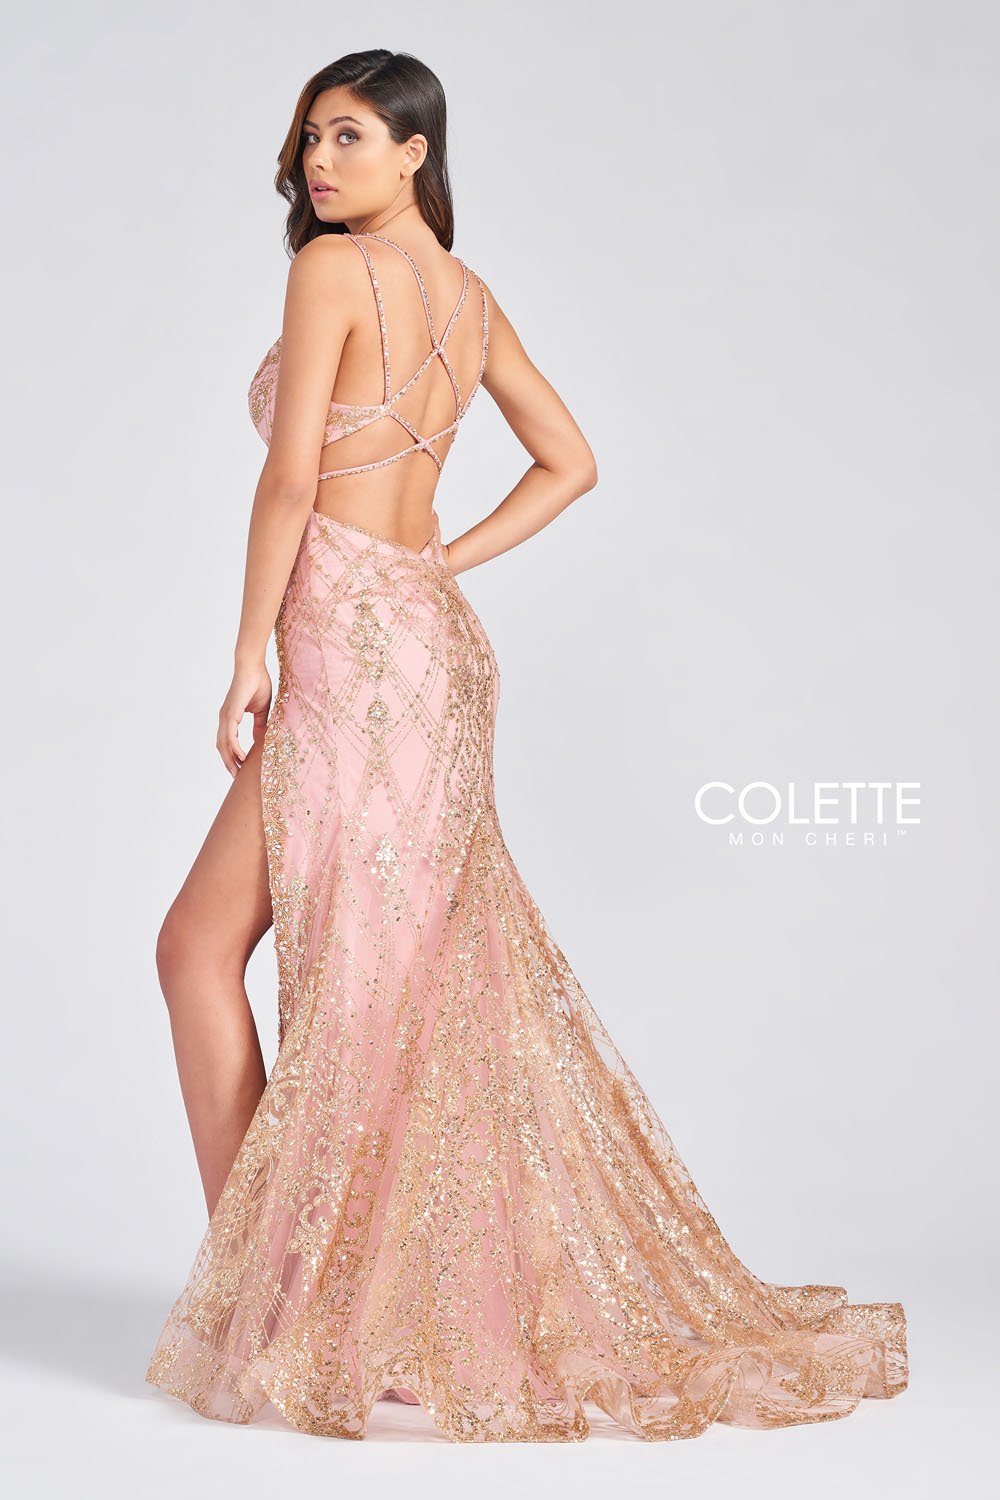 Colette CL12278 Rose Gold prom dresses.  Rose Gold prom dresses image by Colette.